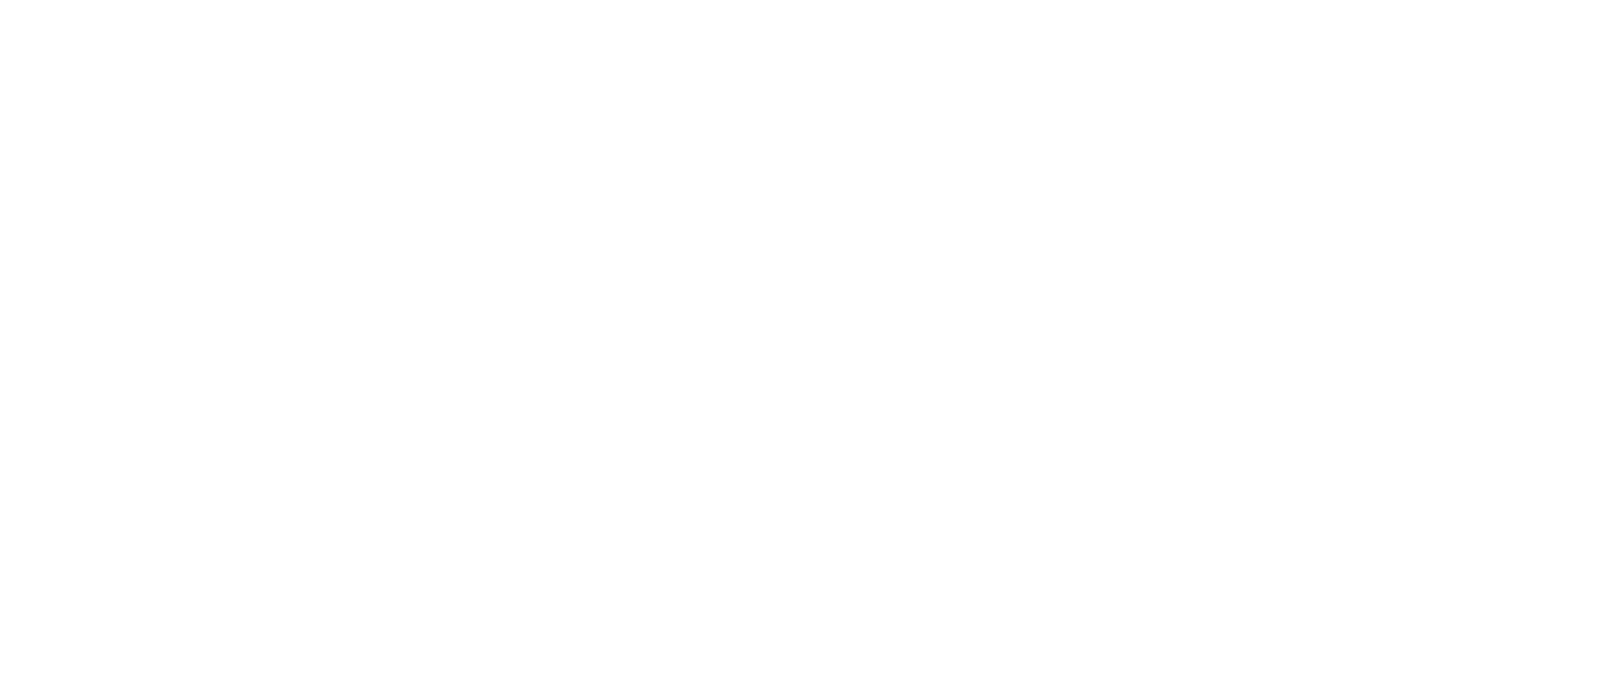 Paramount Resources logo large for dark backgrounds (transparent PNG)